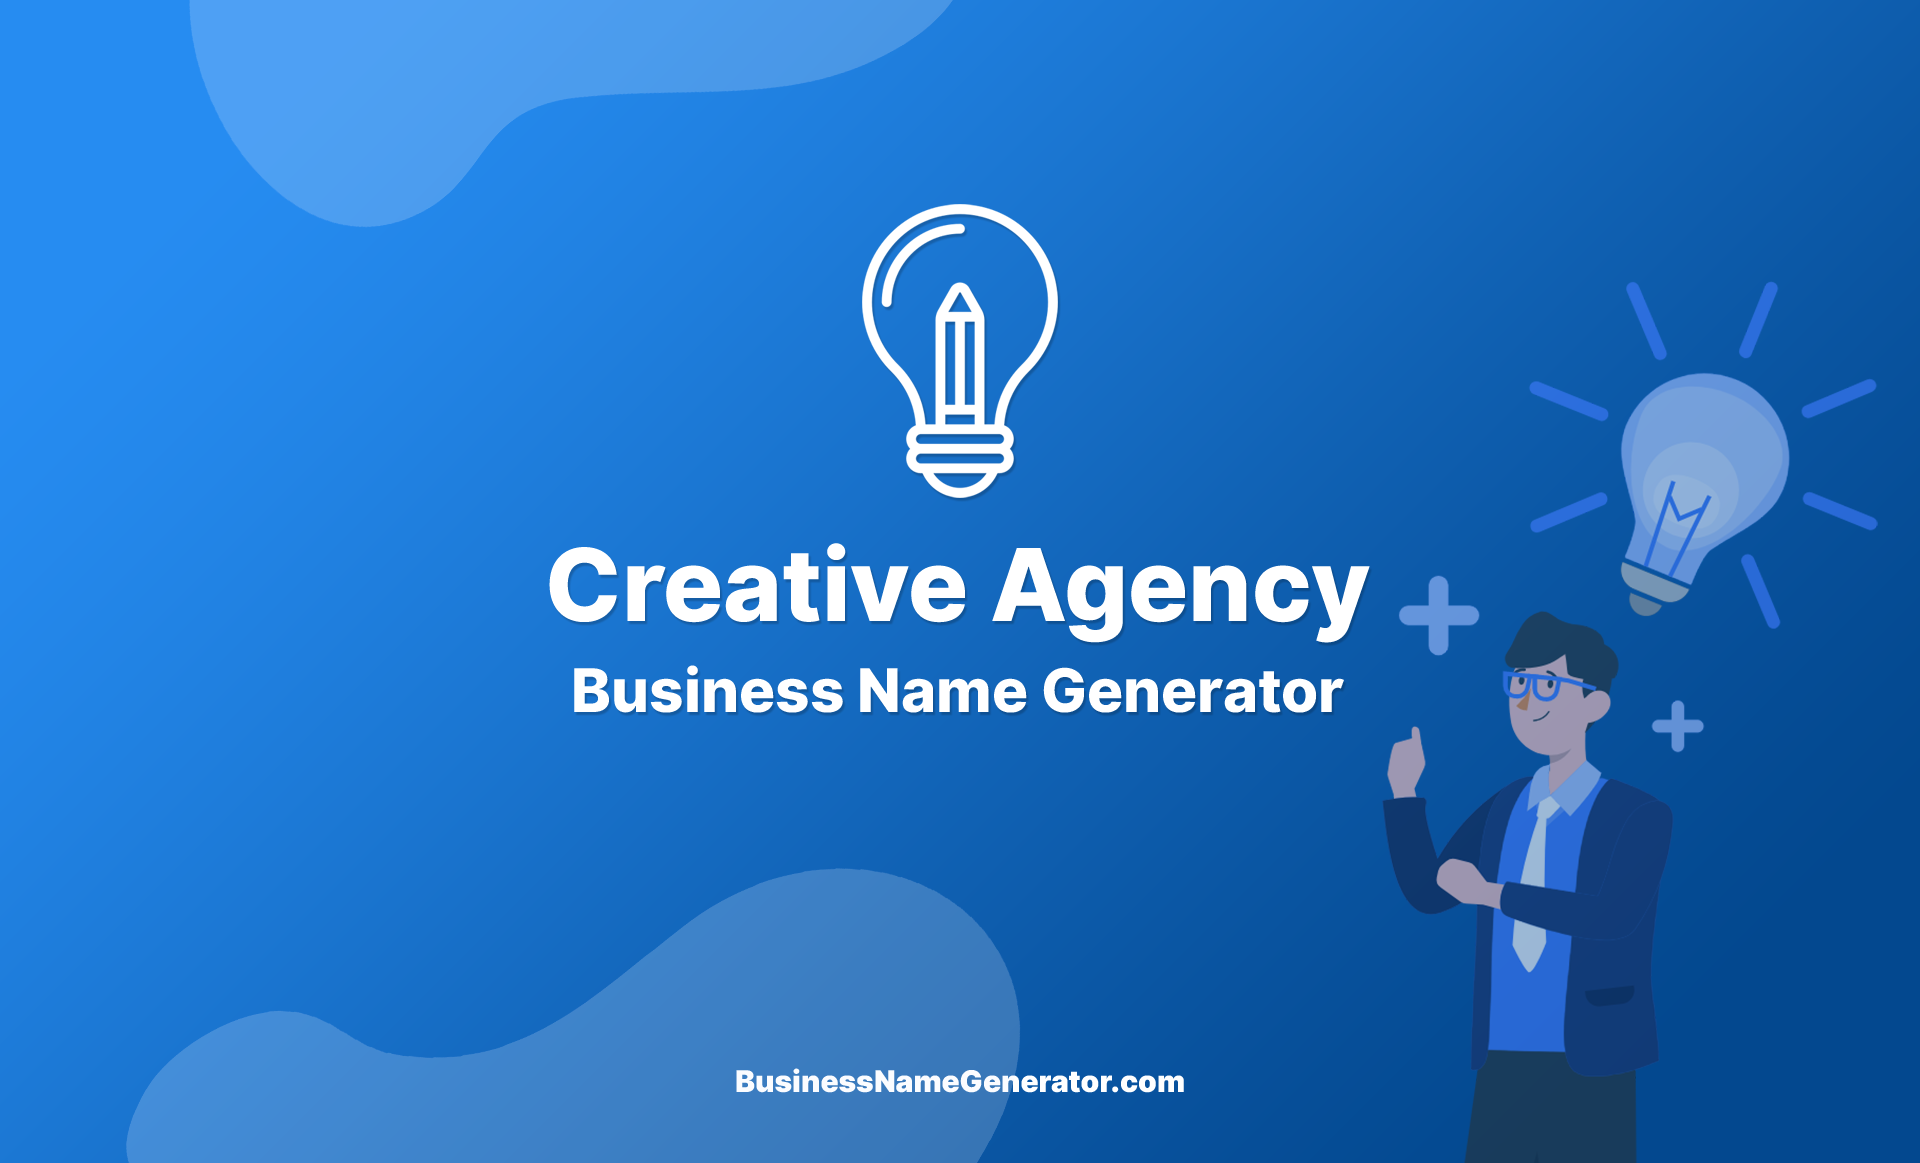 Creative Agency Business Name Generator